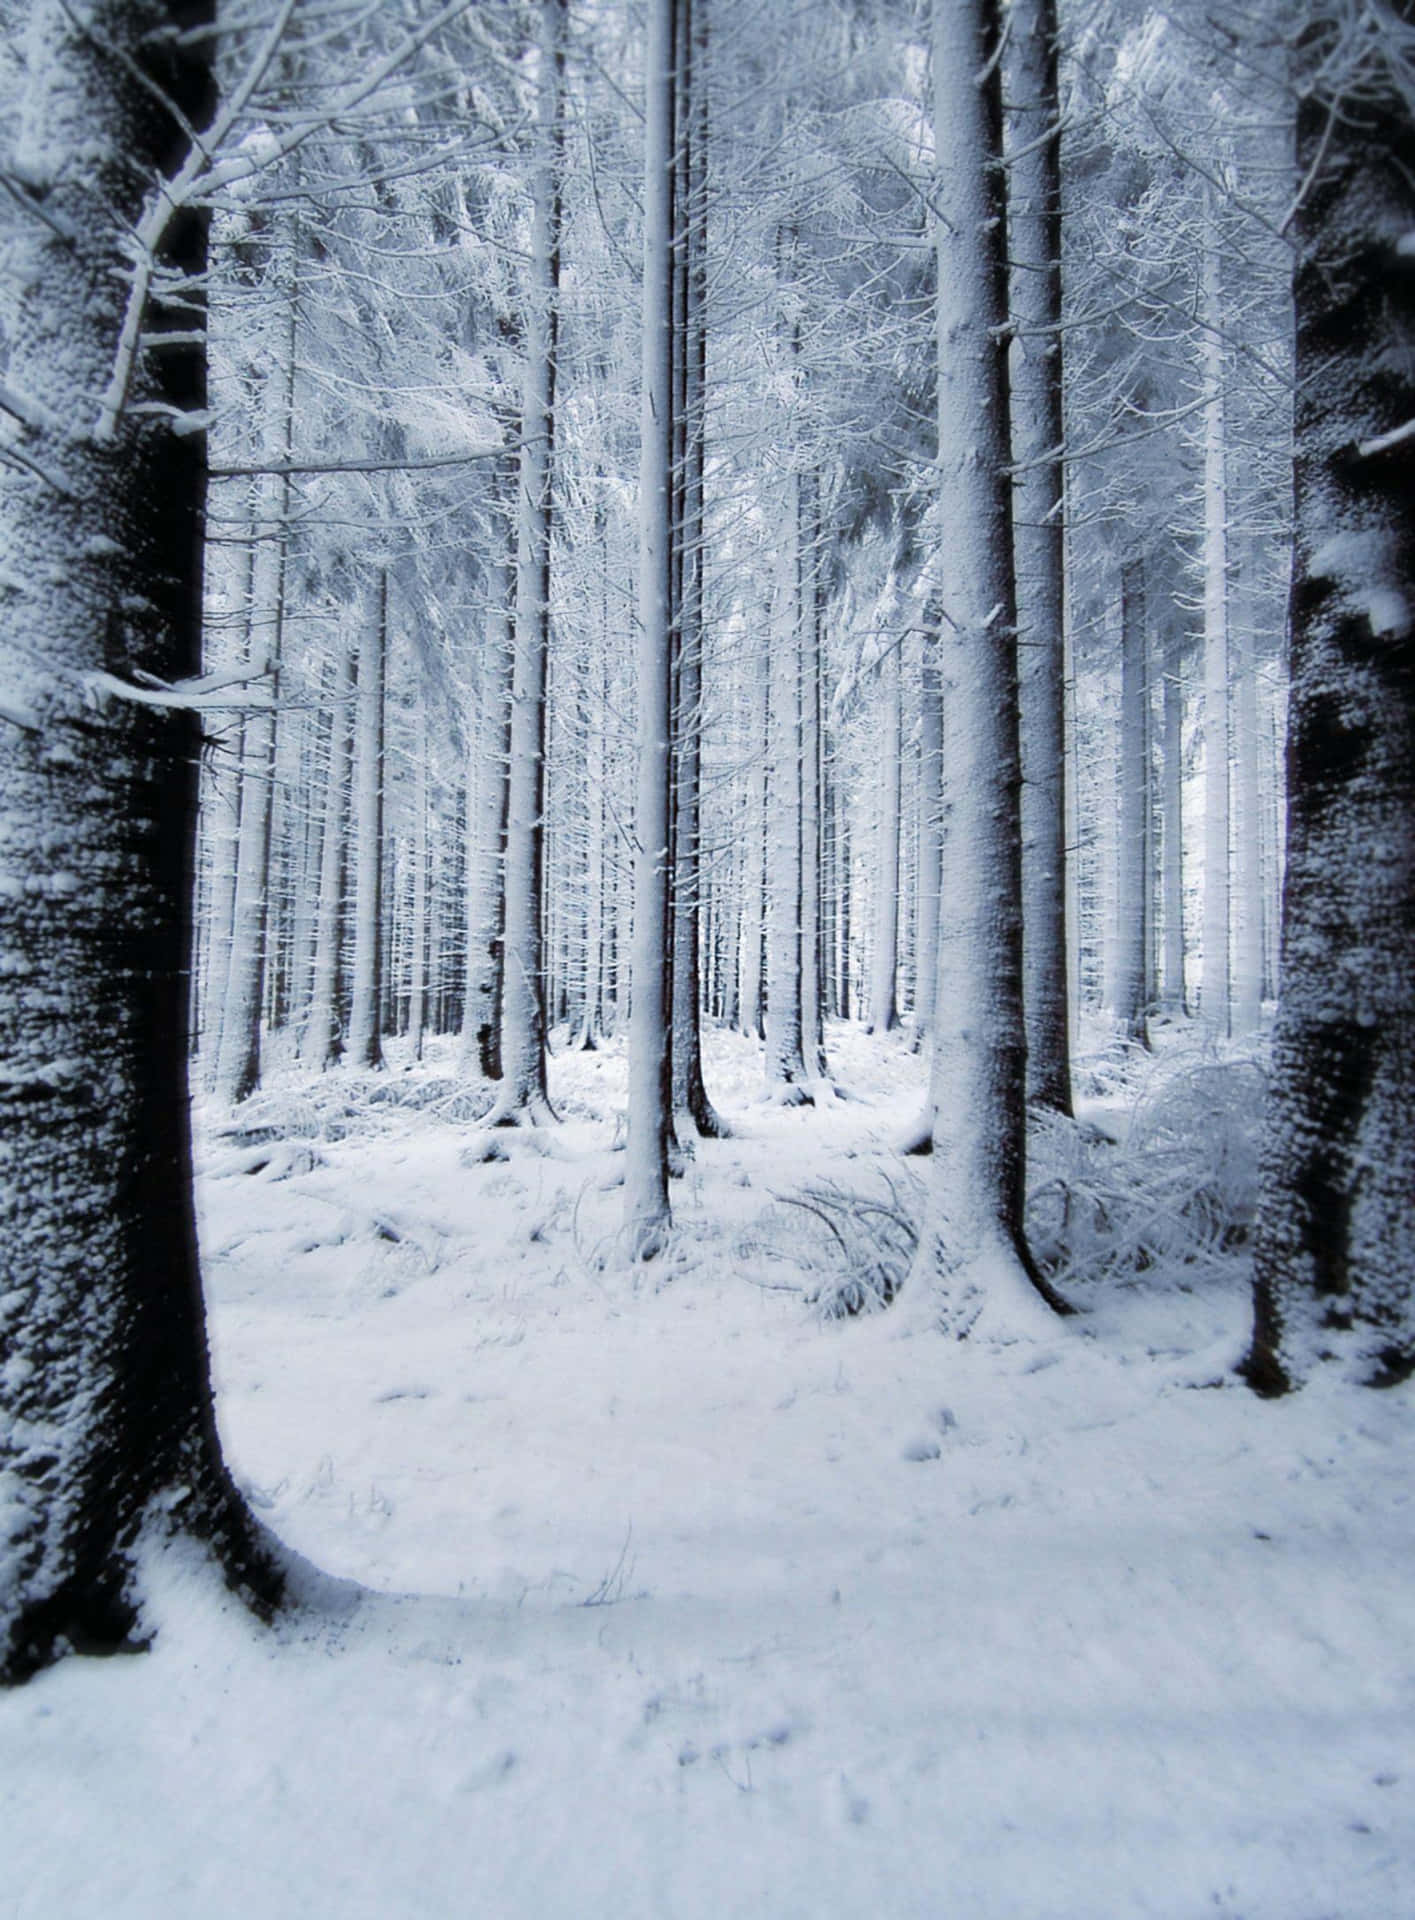 Ethereal Winter Wonderland